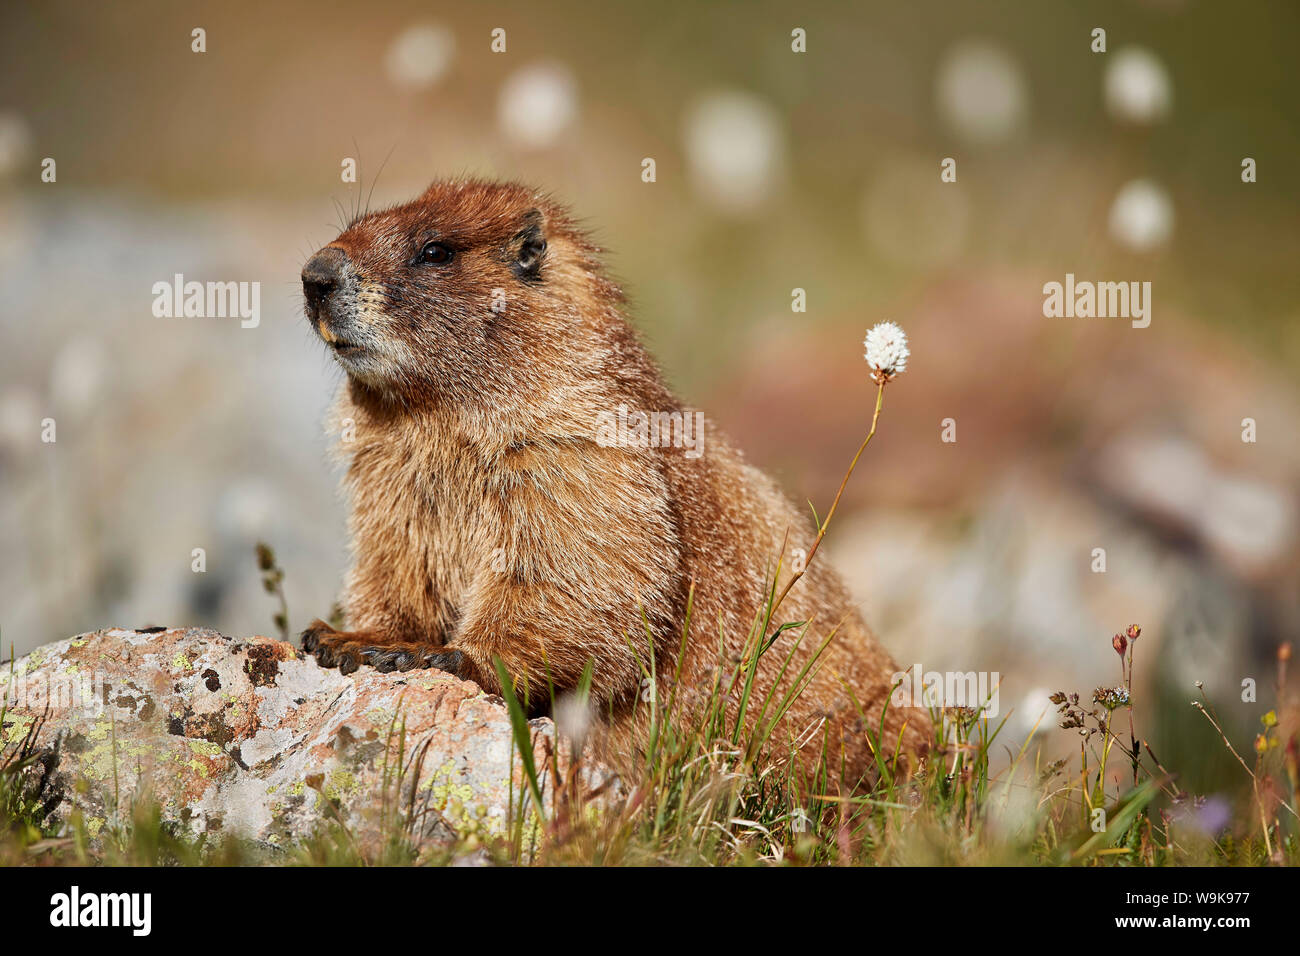 Yellow-bellied marmot (yellowbelly marmot) (Marmota flaviventris) among bistort, San Juan National Forest, Colorado, United States of America Stock Photo